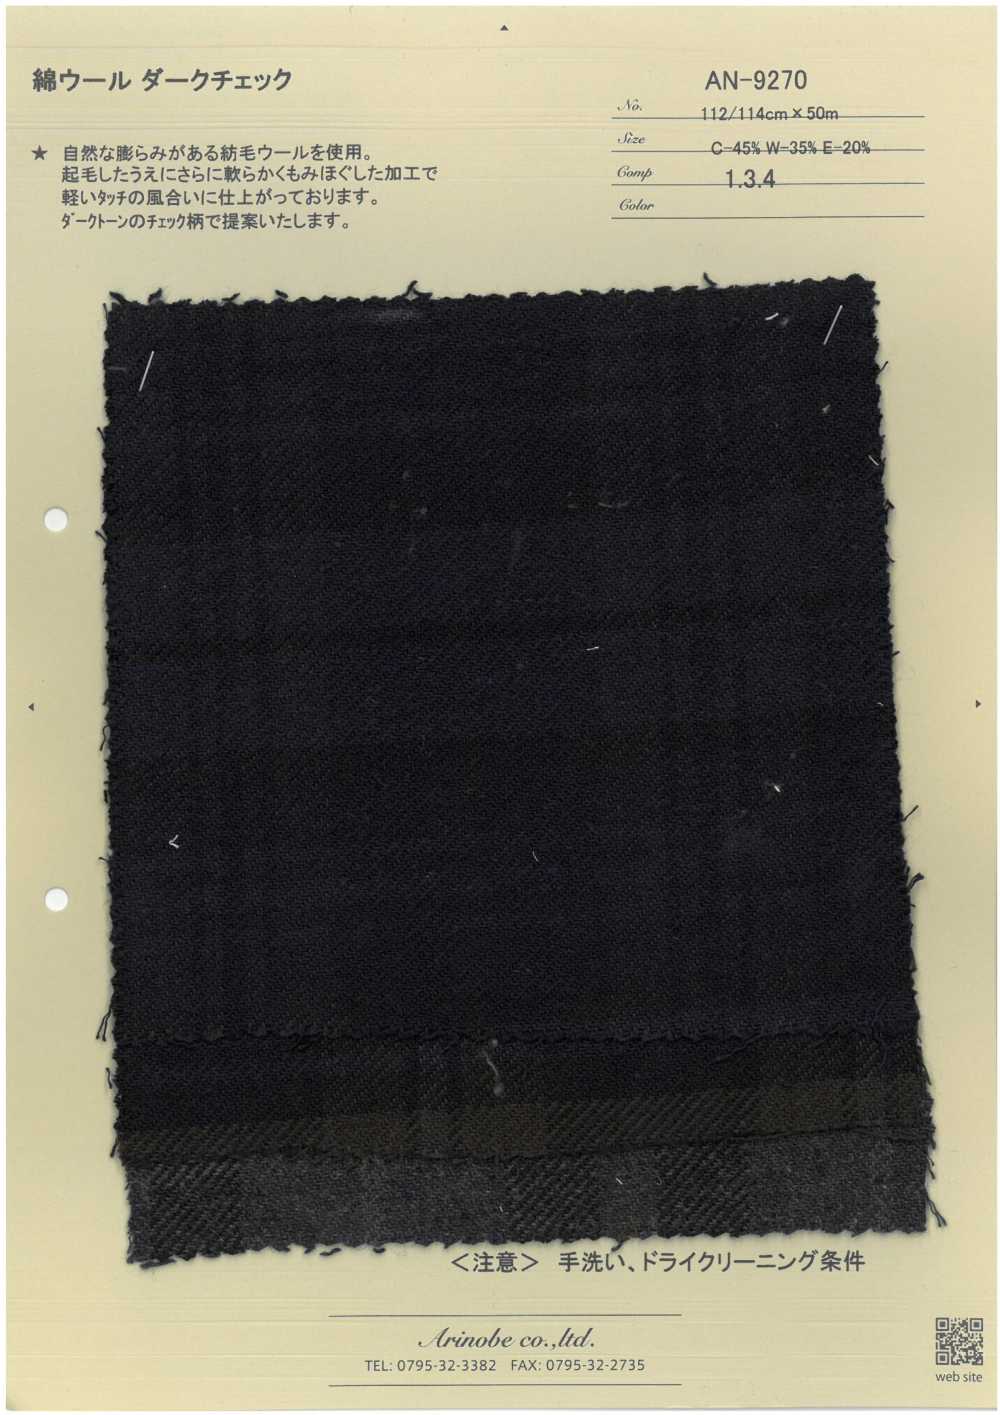 AN-9270 Algodão Xadrez Escuro[Têxtil / Tecido] ARINOBE CO., LTD.